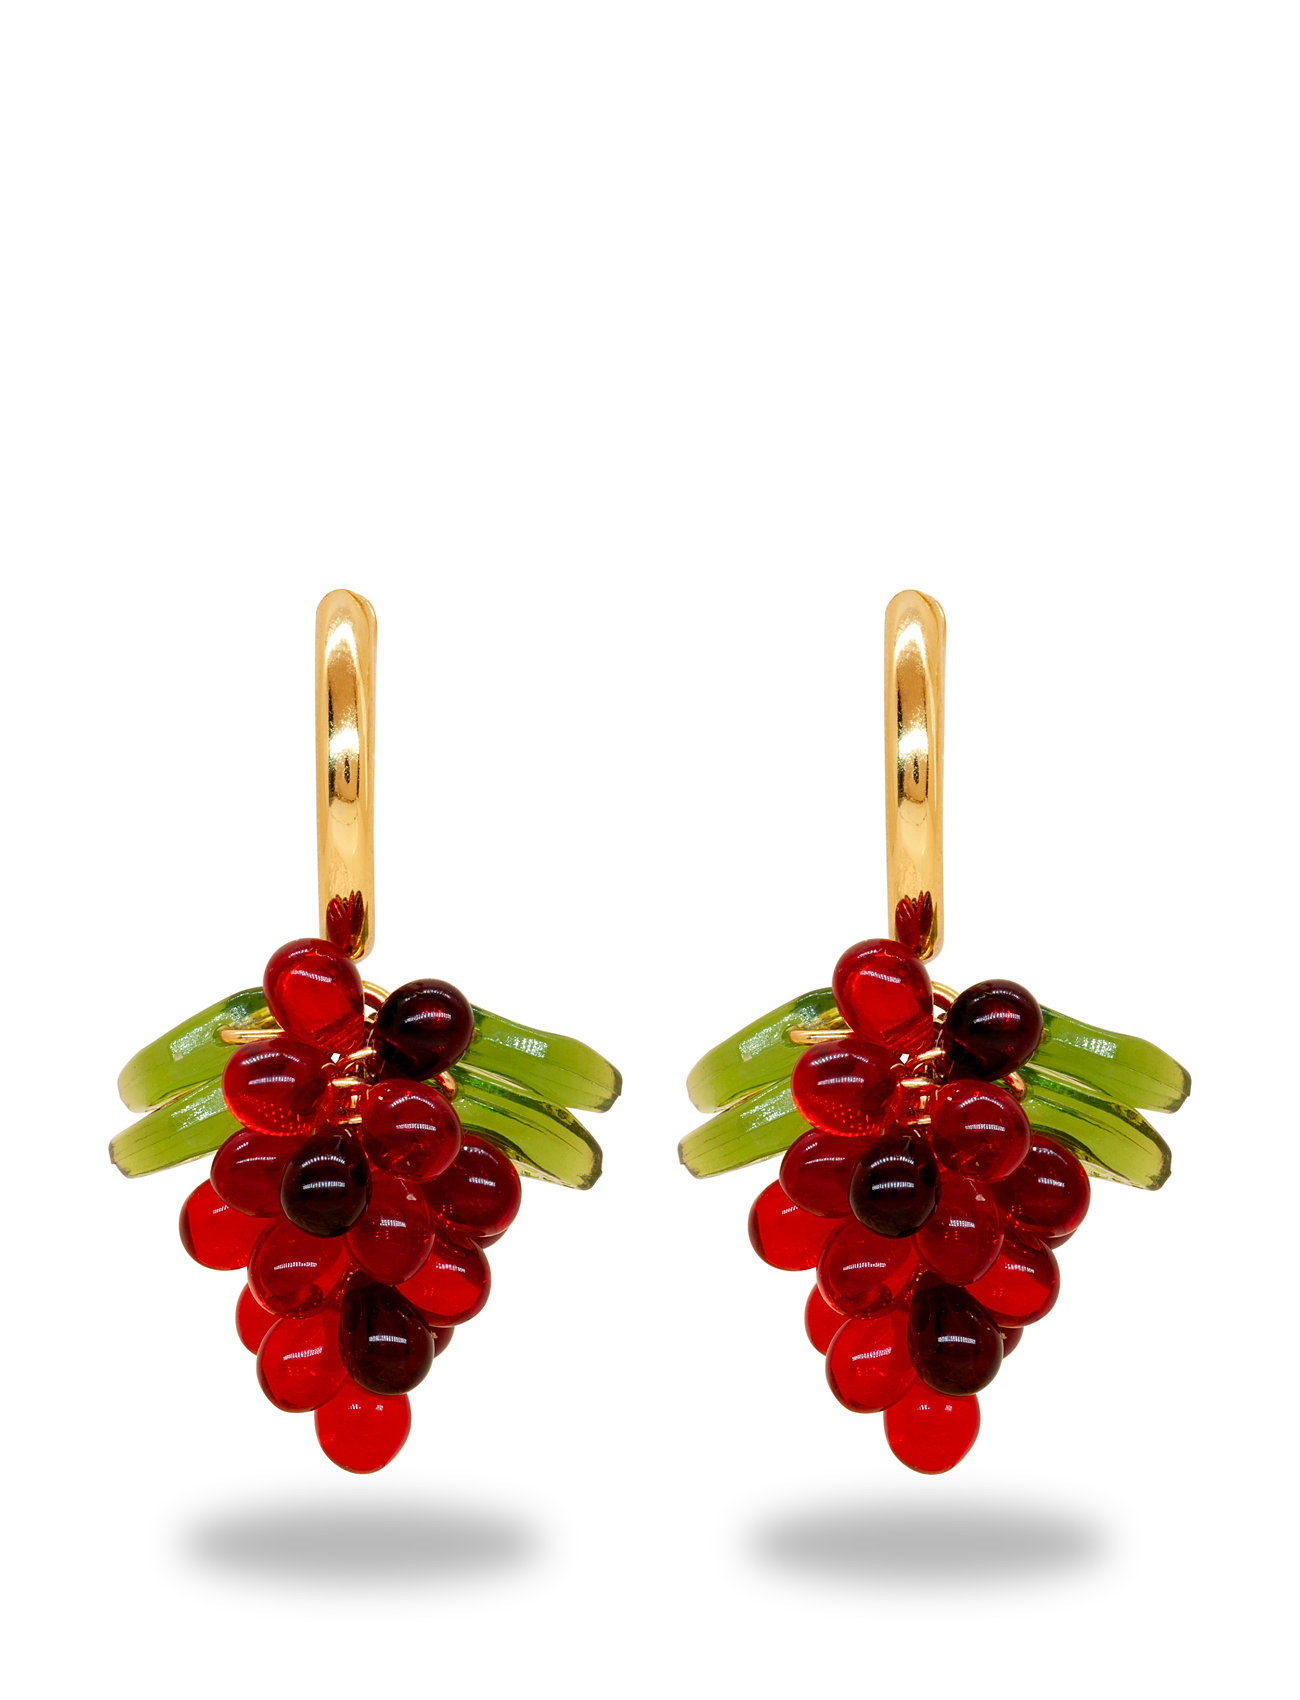 Candy Currant Jelly Earrings Designers Jewellery Earrings Hoops Red ANNELE